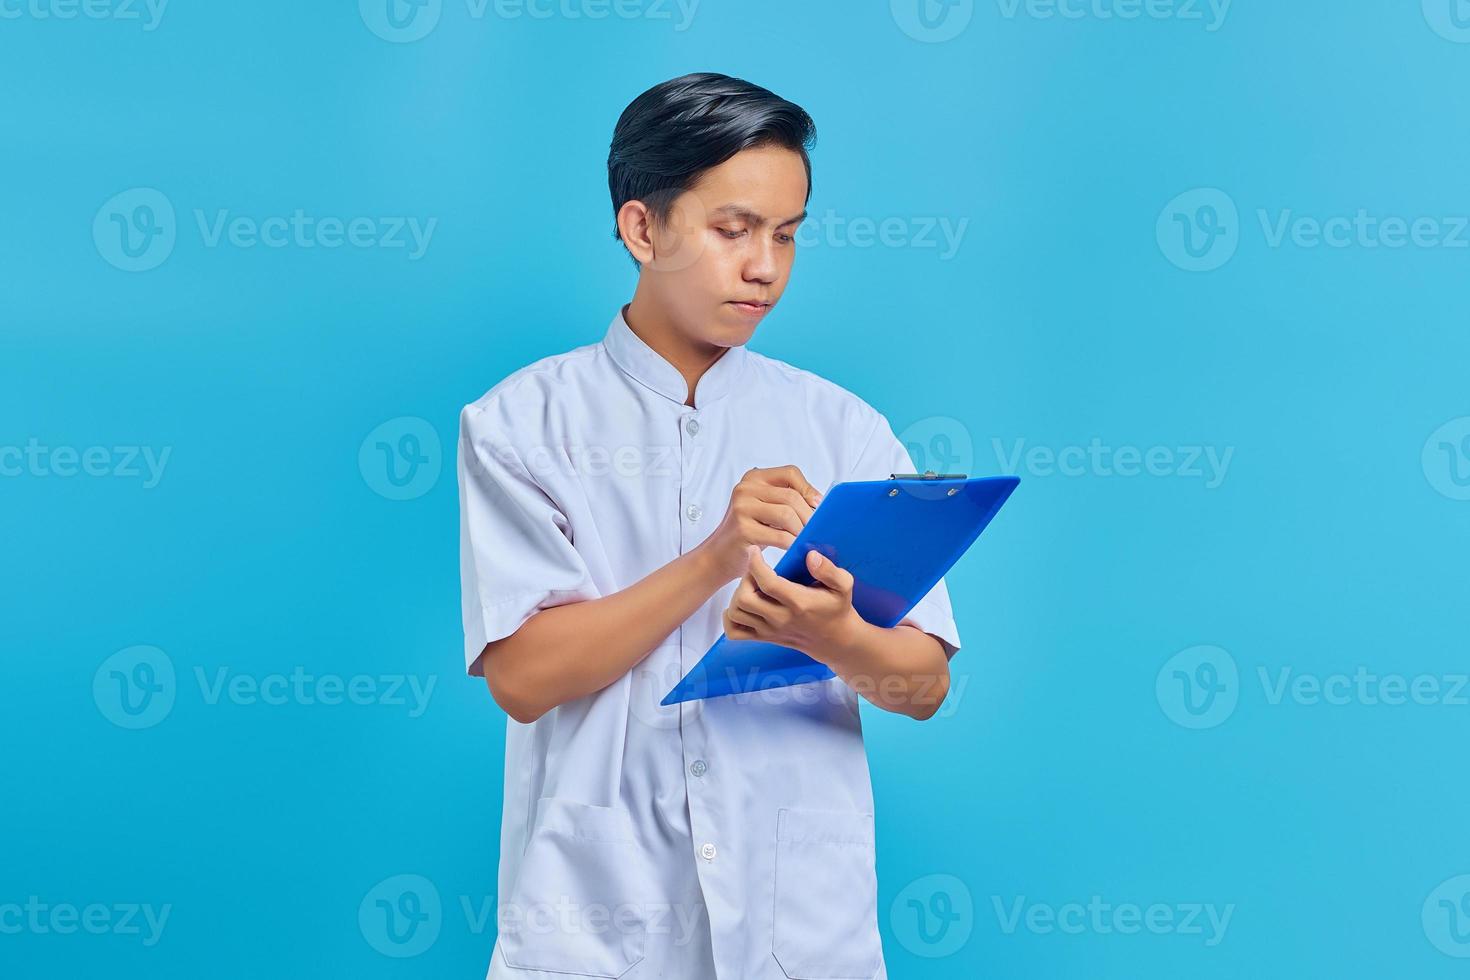 glimlachende jonge verpleger die aantekeningen maakt op klembord op blauwe achtergrond foto